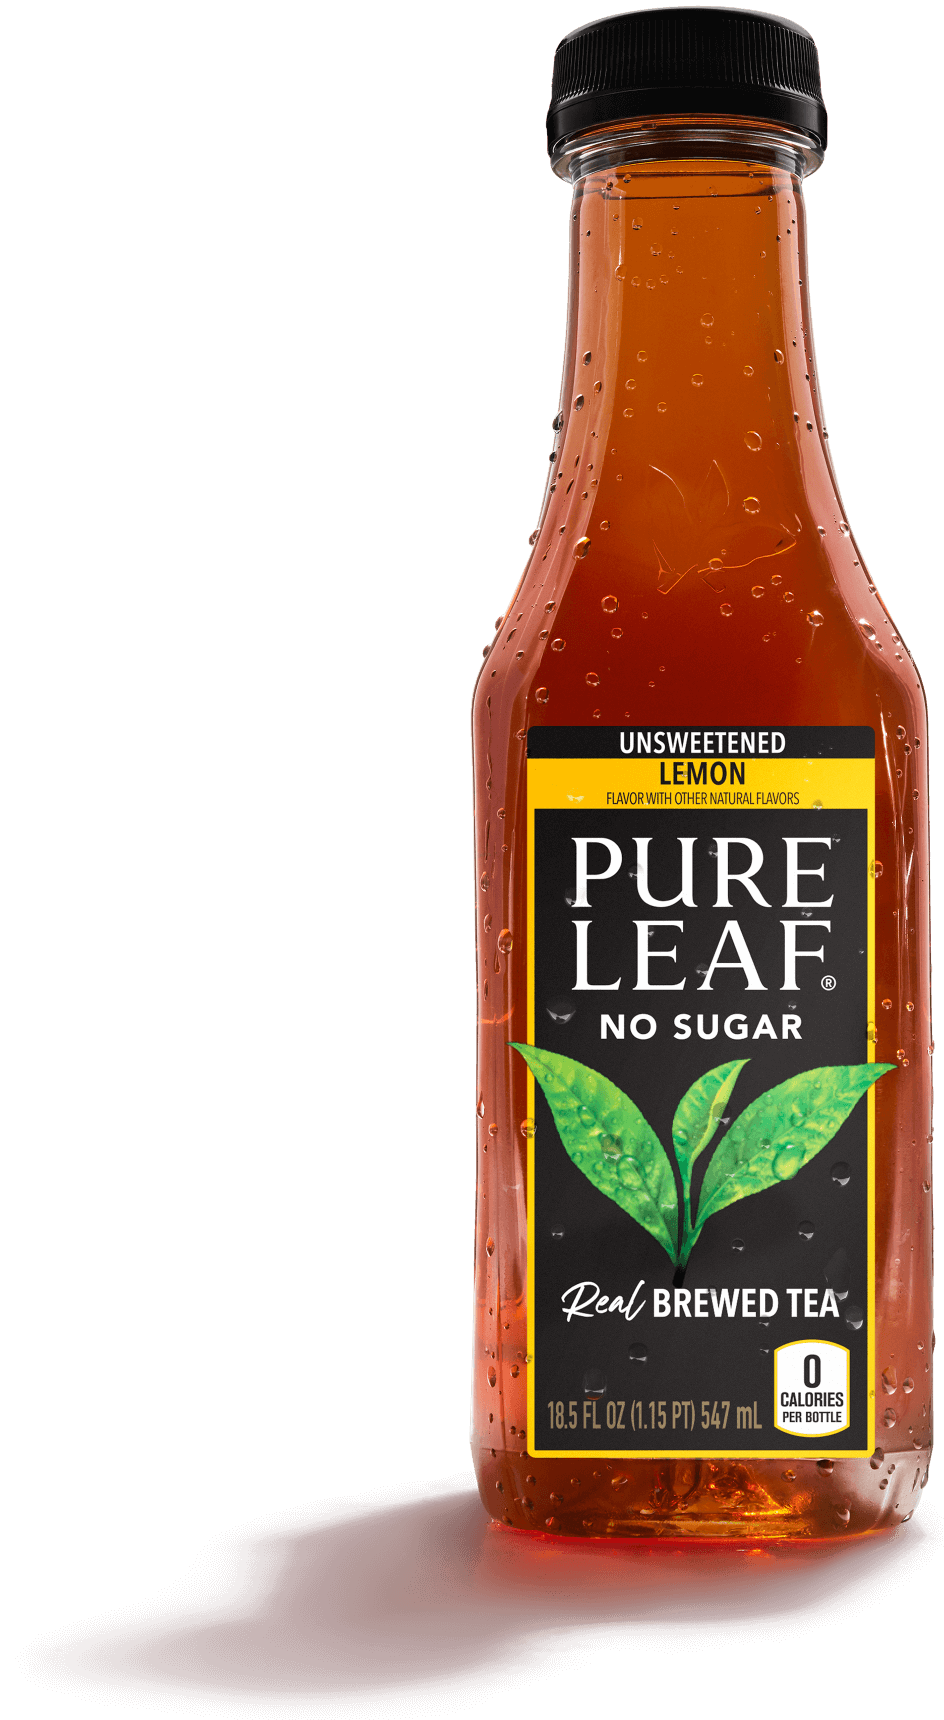 Pure Leaf Launches Three New Subtly Sweet Lower Sugar Iced Teas